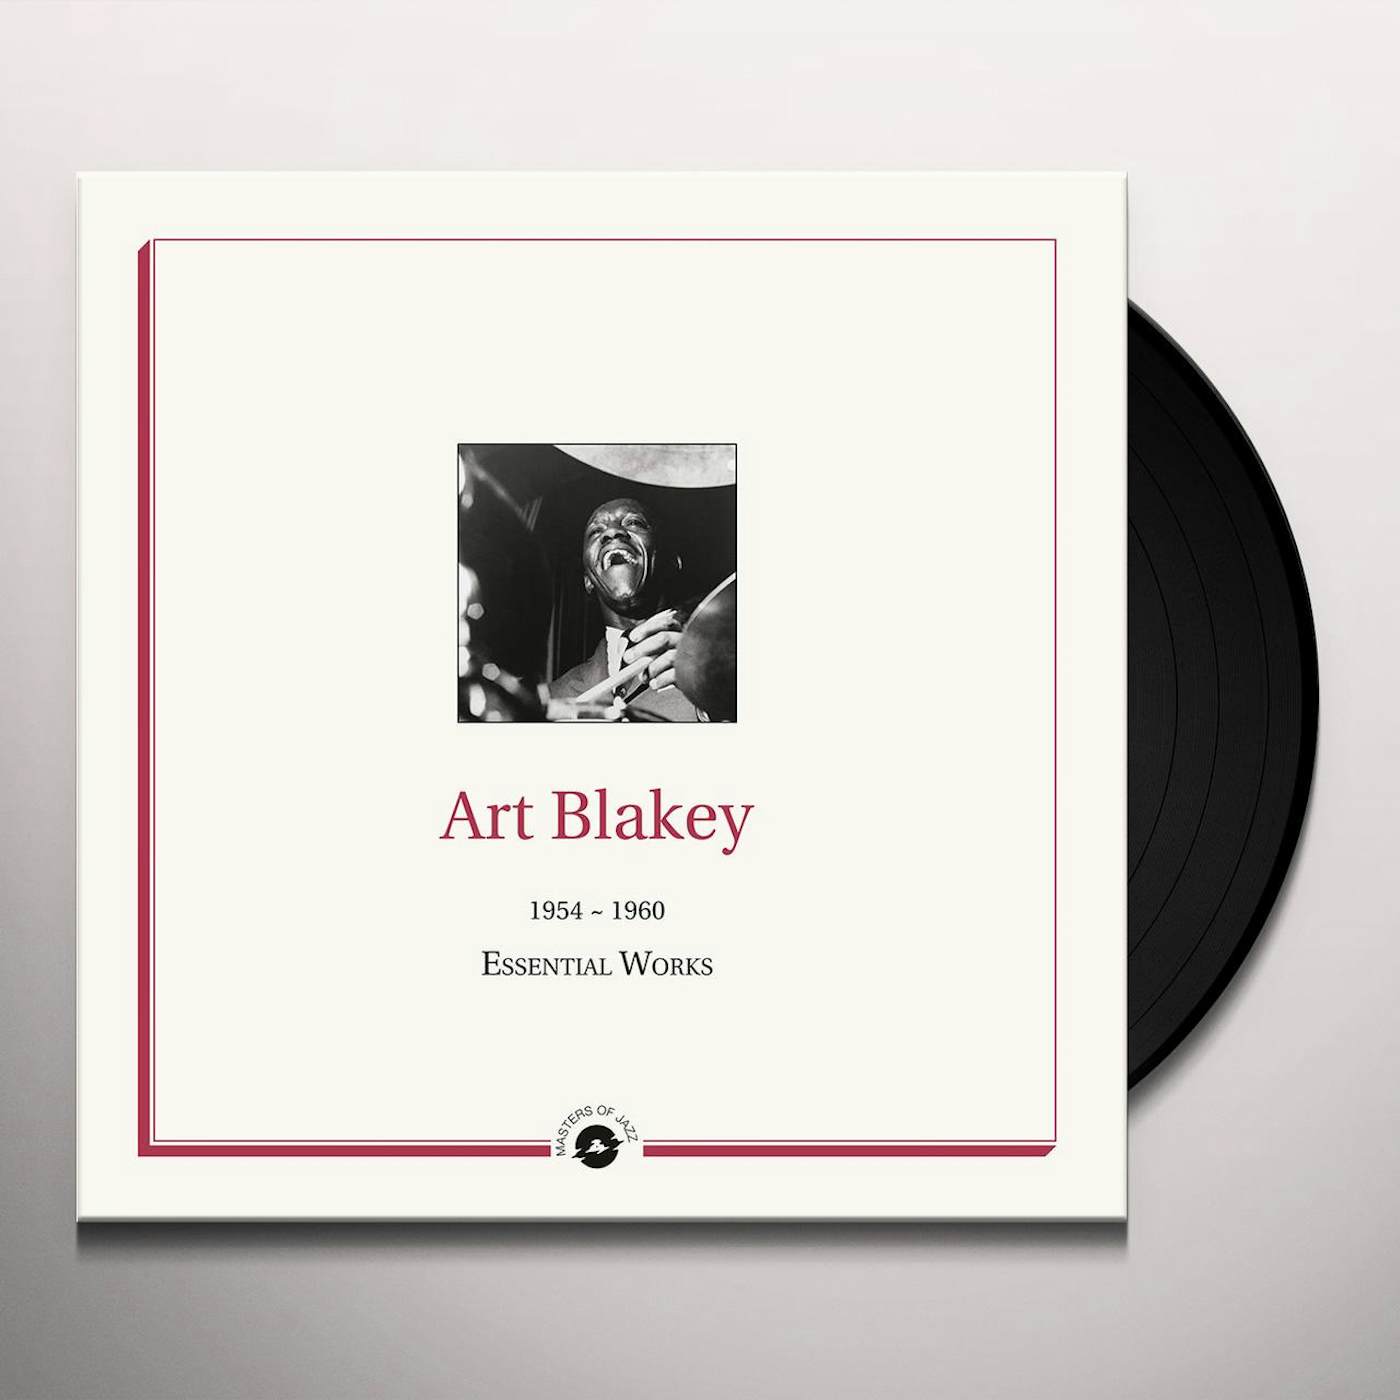 Art Blakey ESSENTIAL WORKS 1954-1960 Vinyl Record